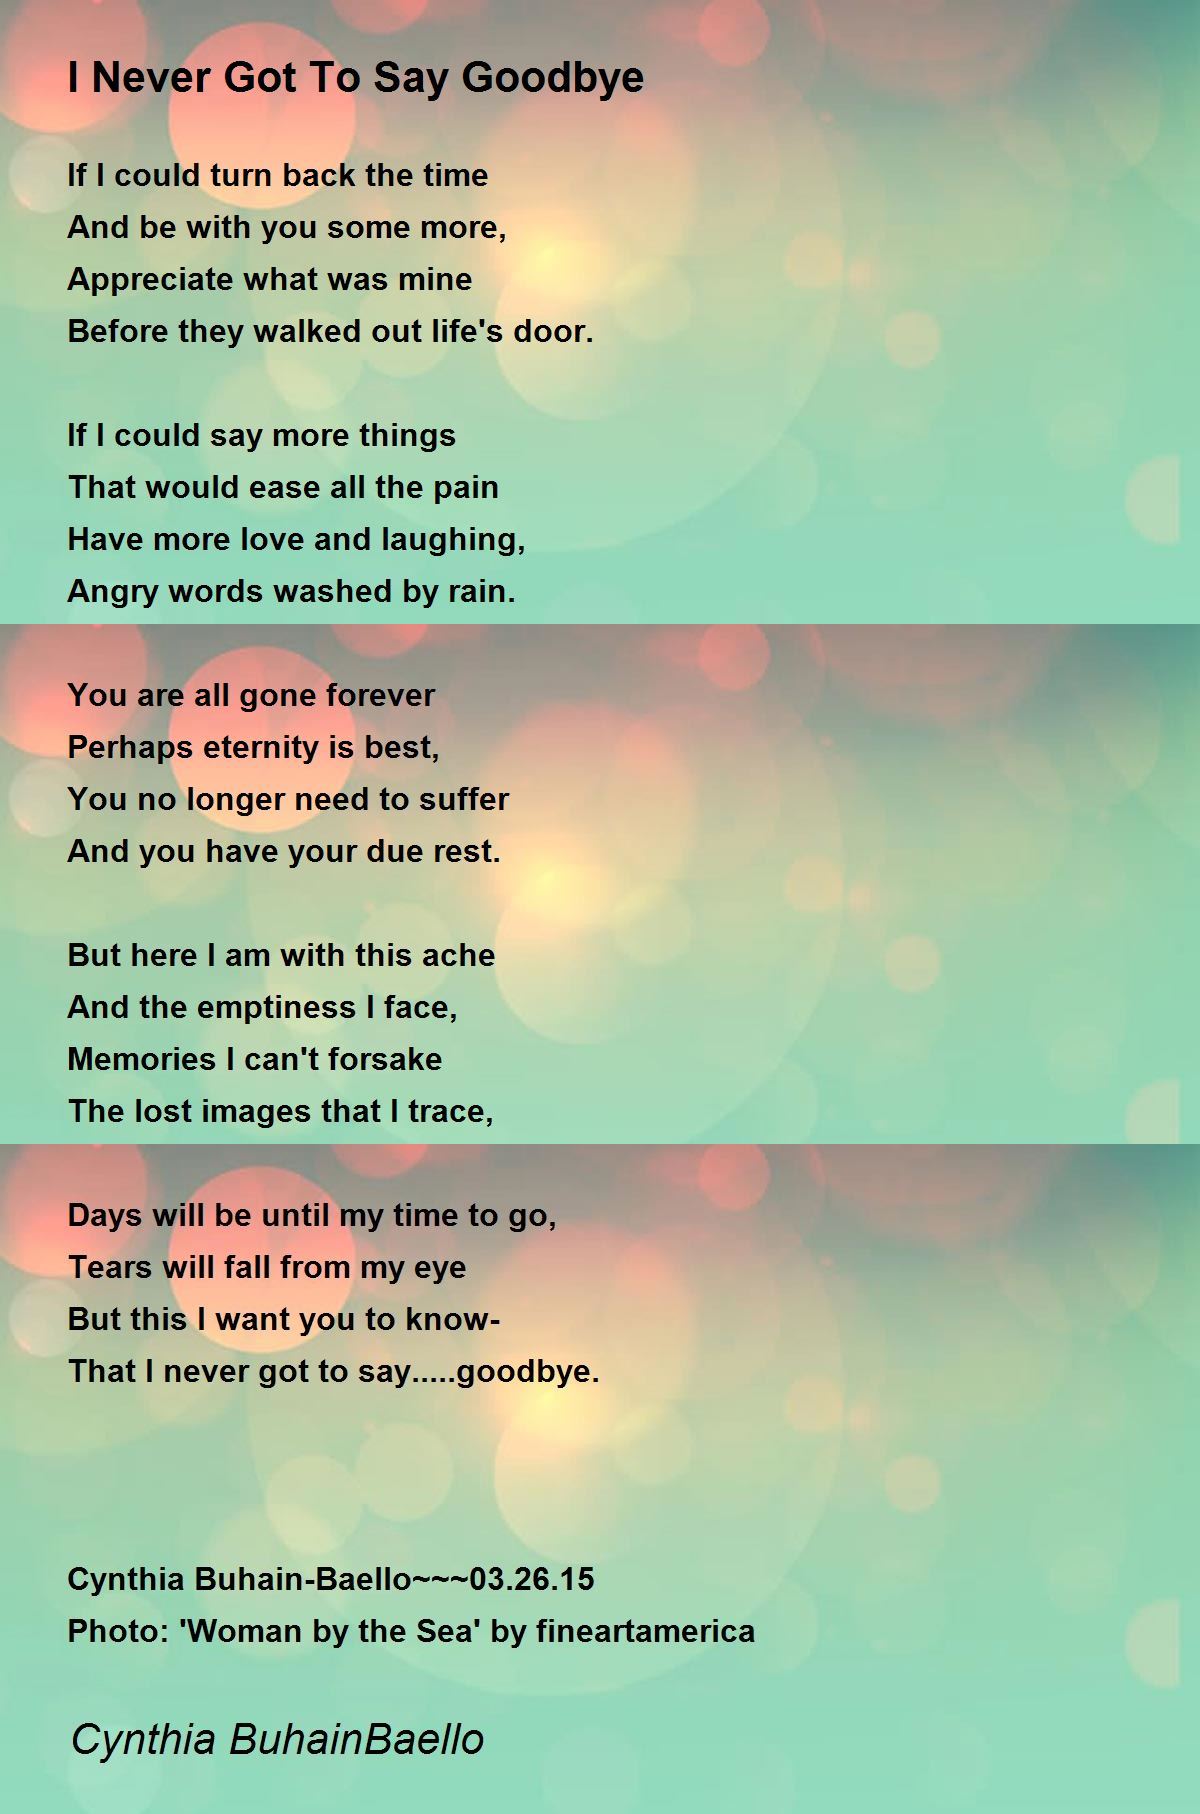 I Never Got To Say Goodbye Poem by Cynthia BuhainBaello - Poem Hunter